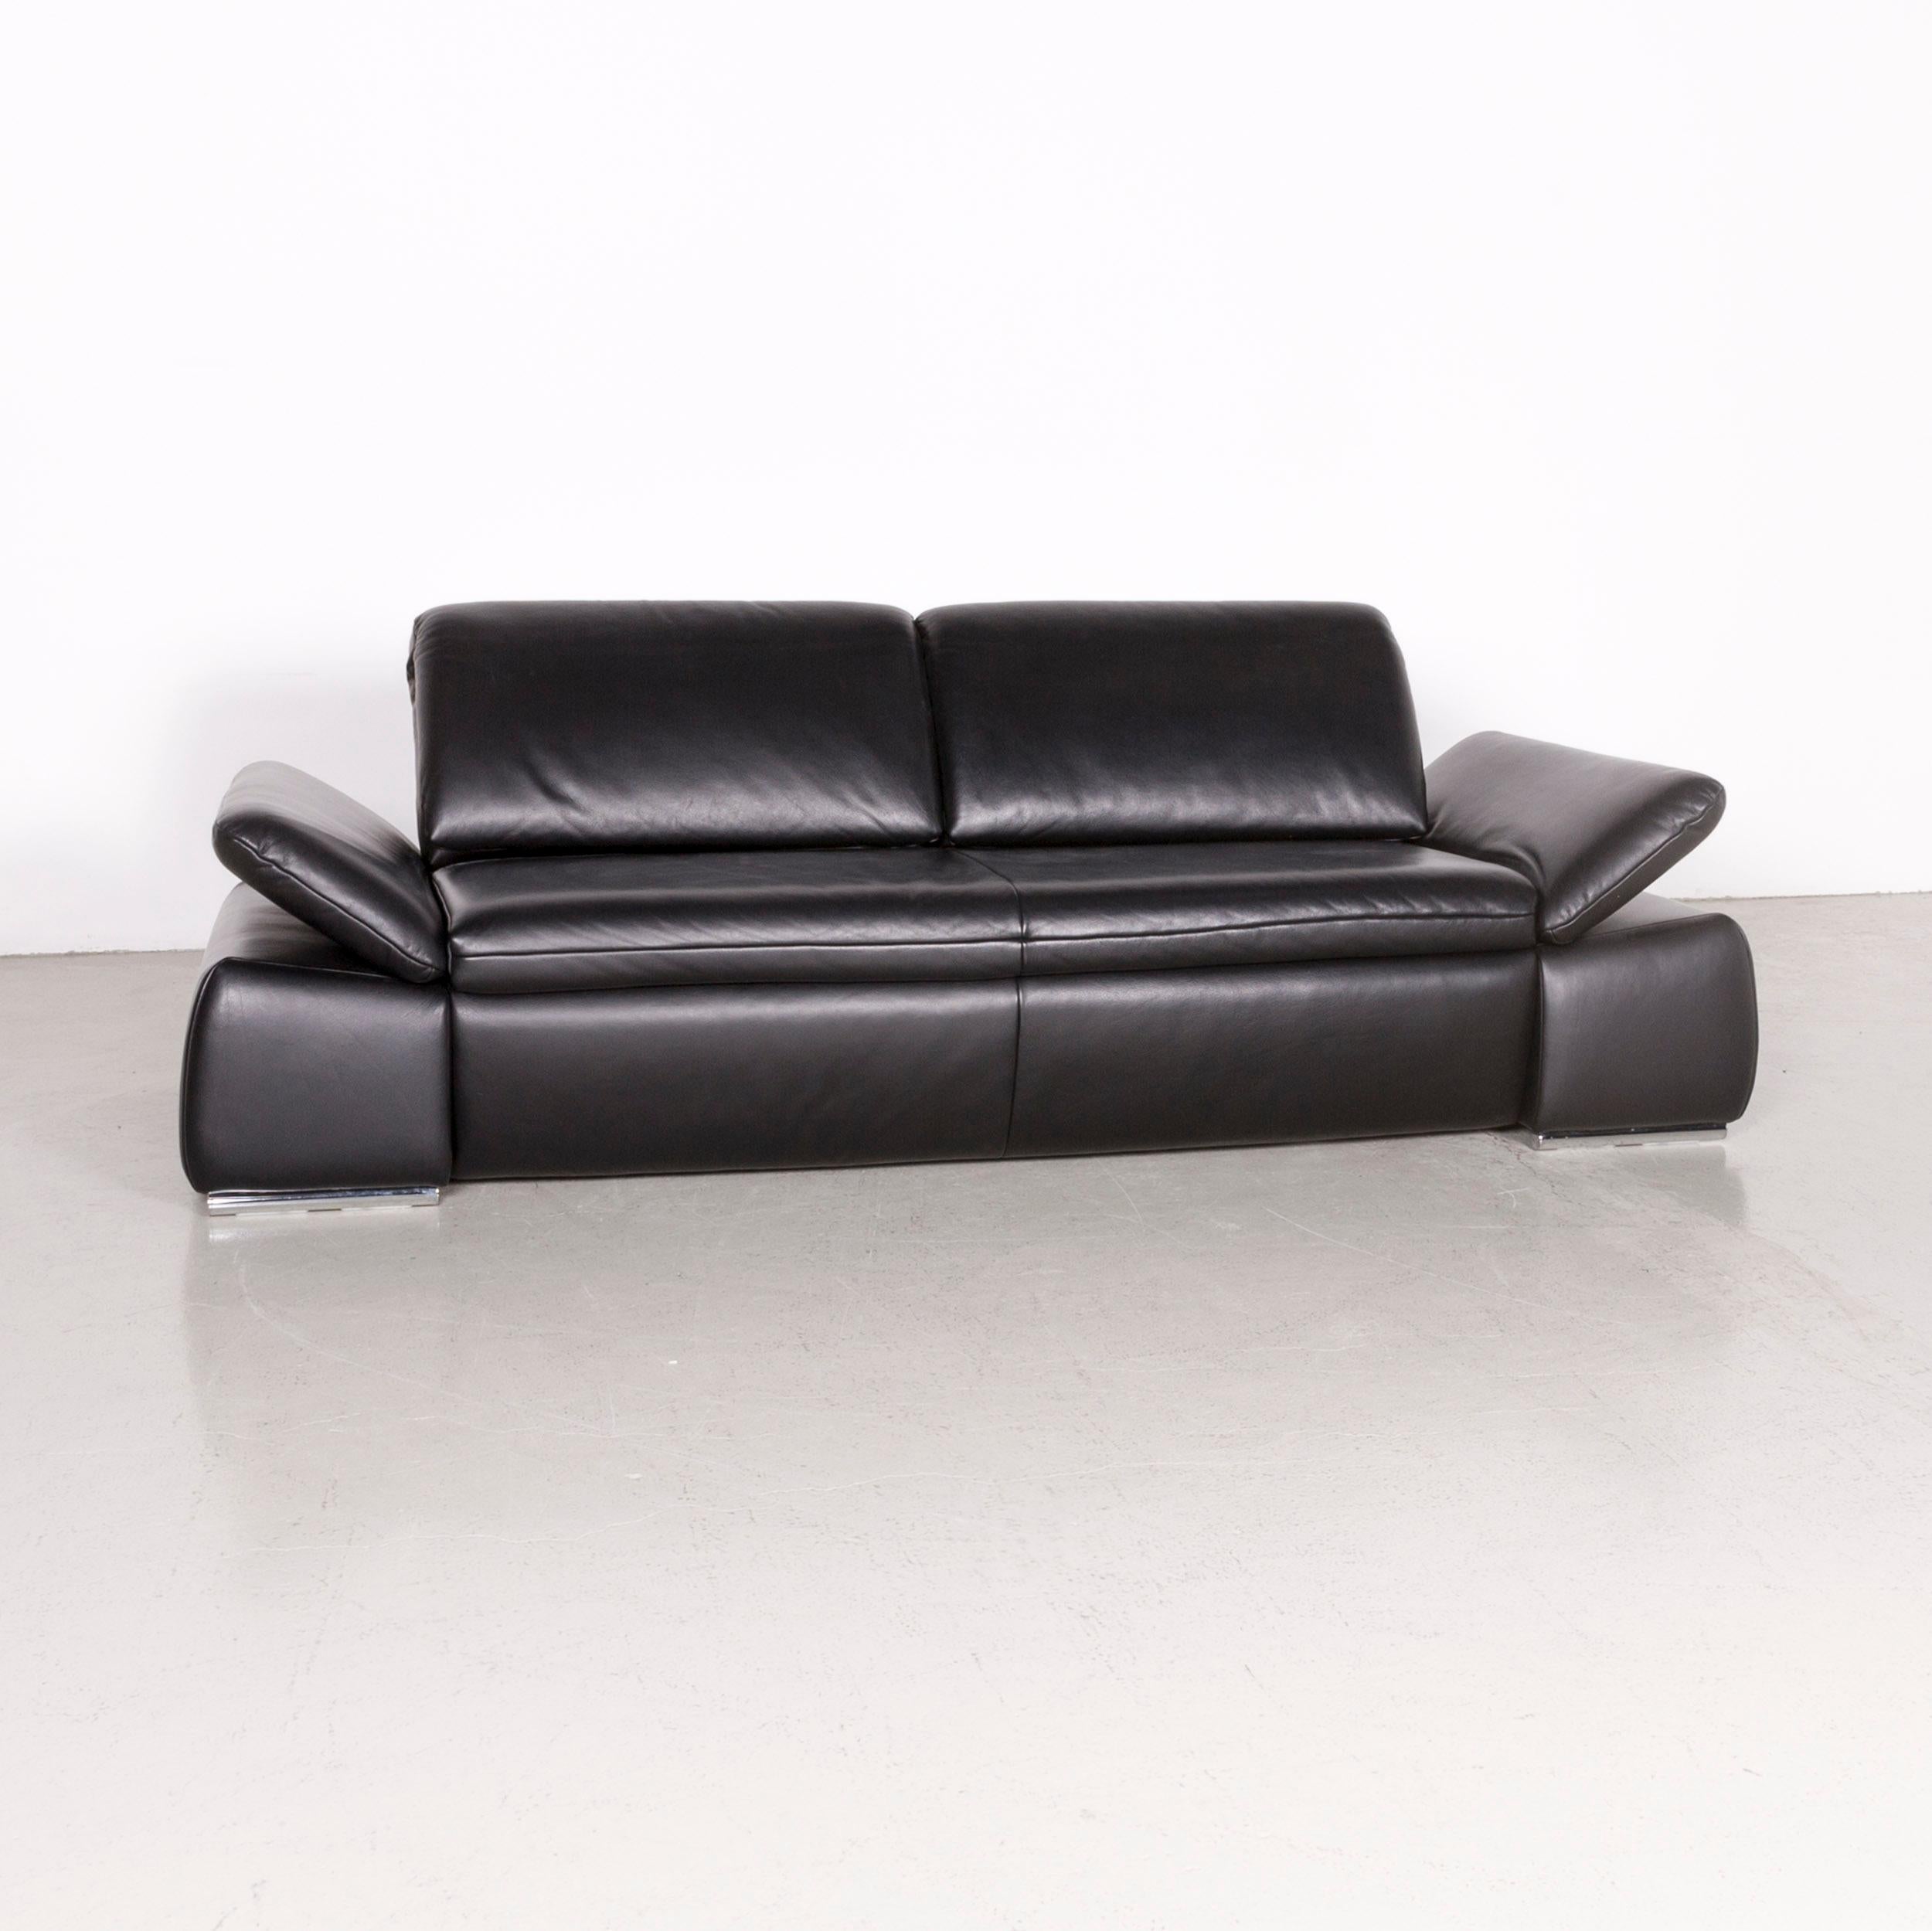 Koinor Evento designer sofa black three-seat leather couch.